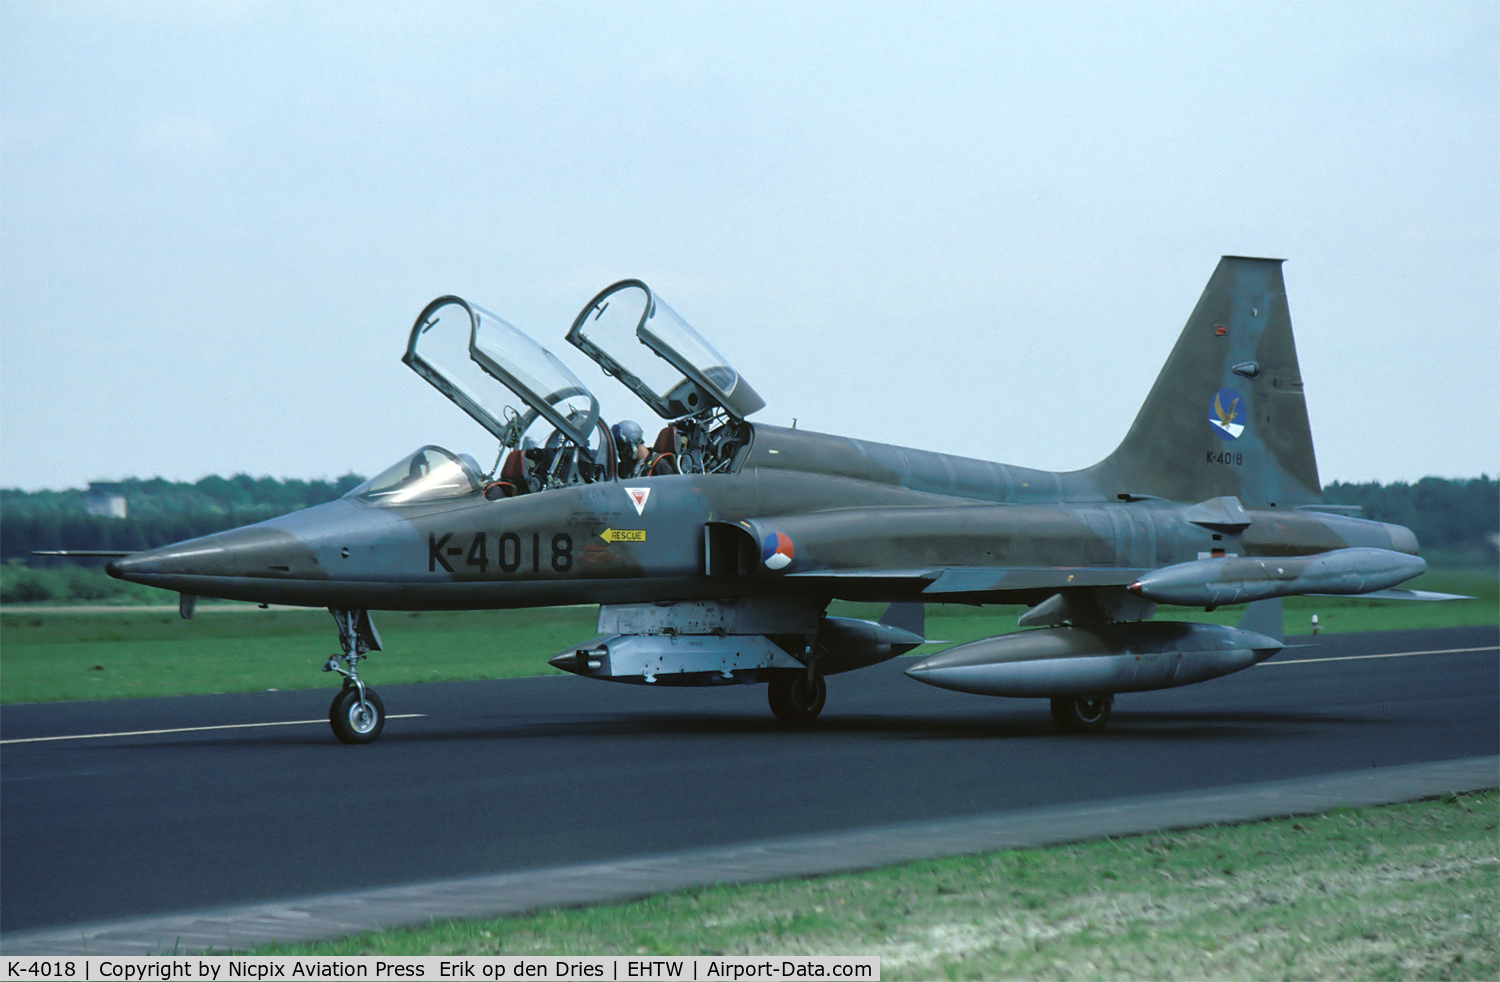 K-4018, 1971 Canadair NF-5B Freedom Fighter C/N 4018, Royal Netherlands AF NF-5B K-4018 seen here at its' homebase